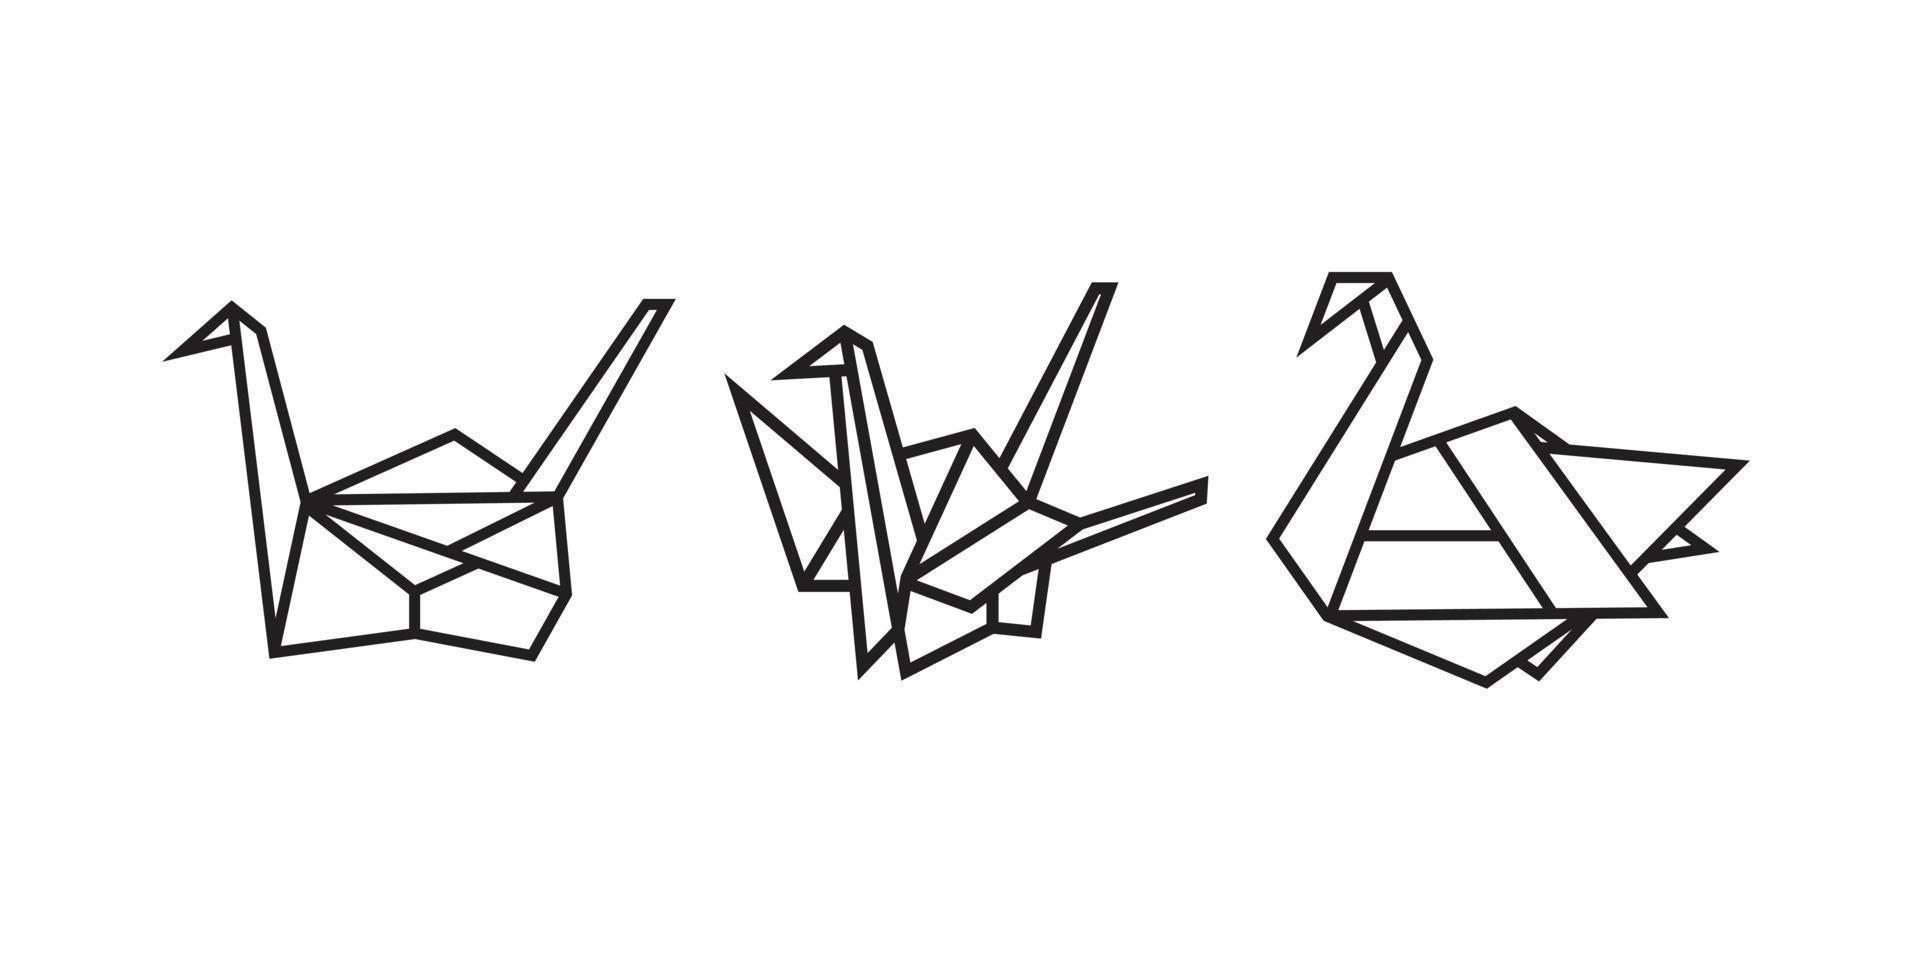 Bird illustrations in origami style vector